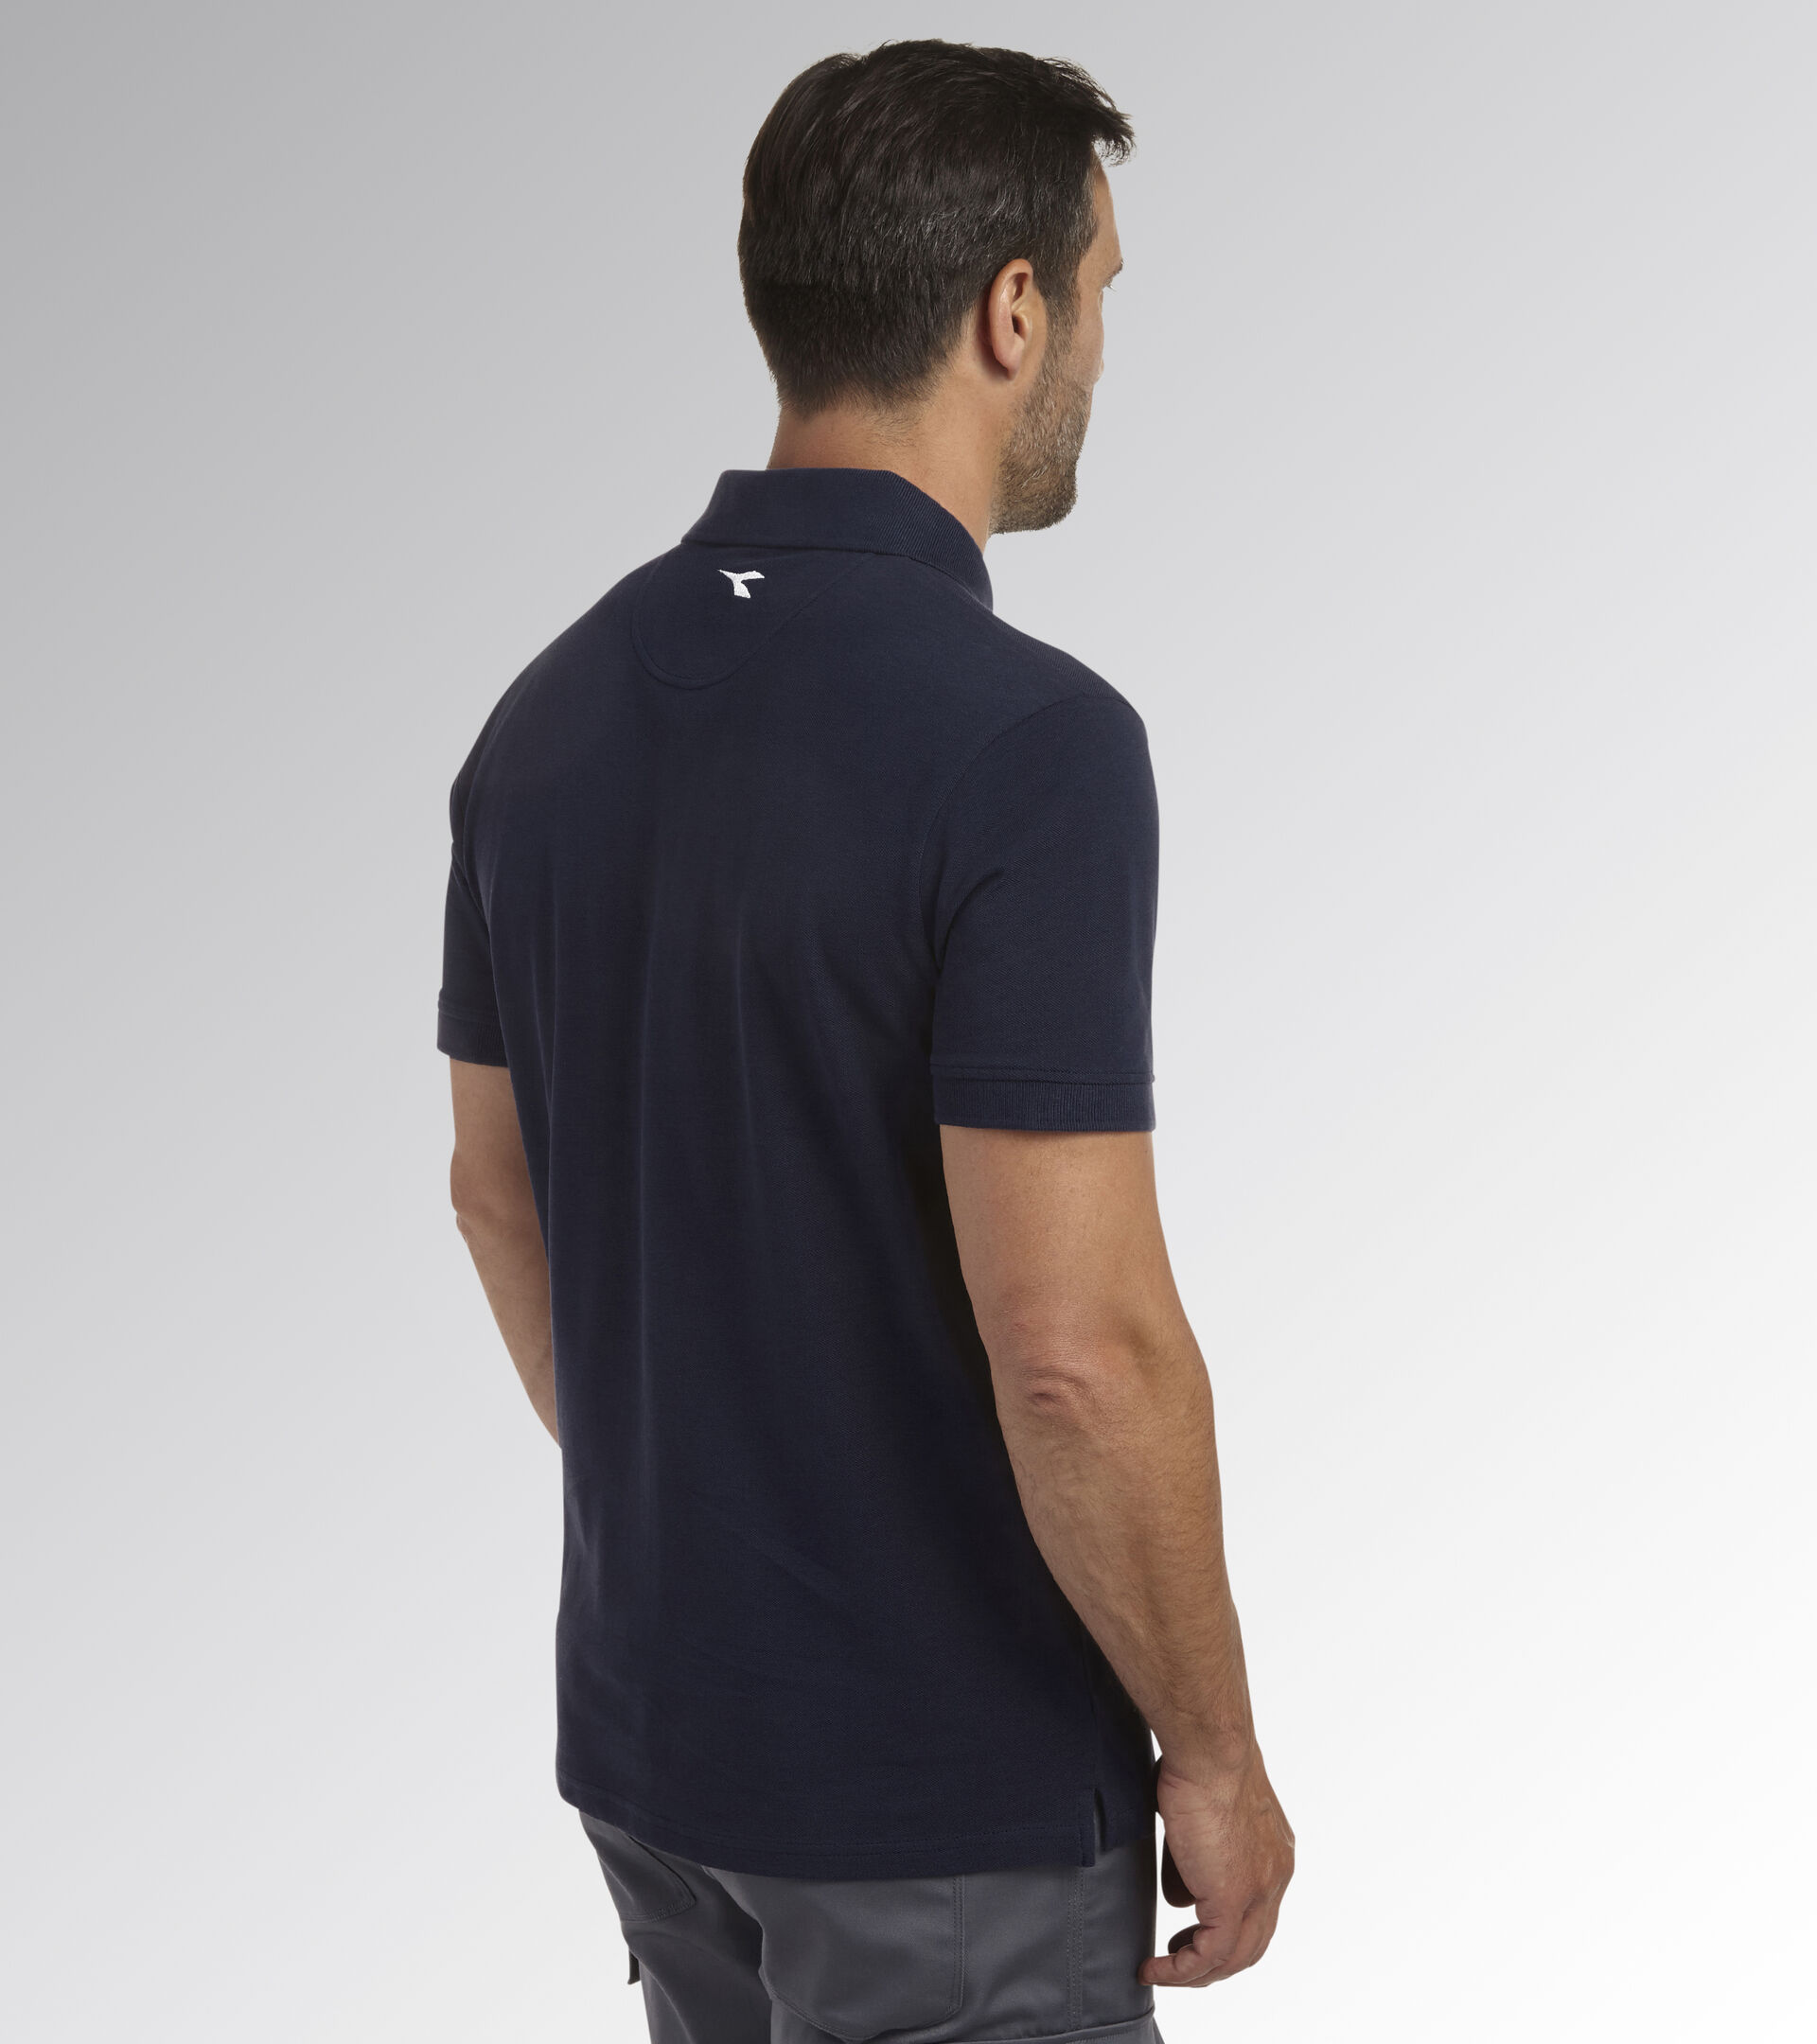 Short-sleeved work polo shirt POLO MC ATLAR ORGANIC CLASSIC NAVY - Utility